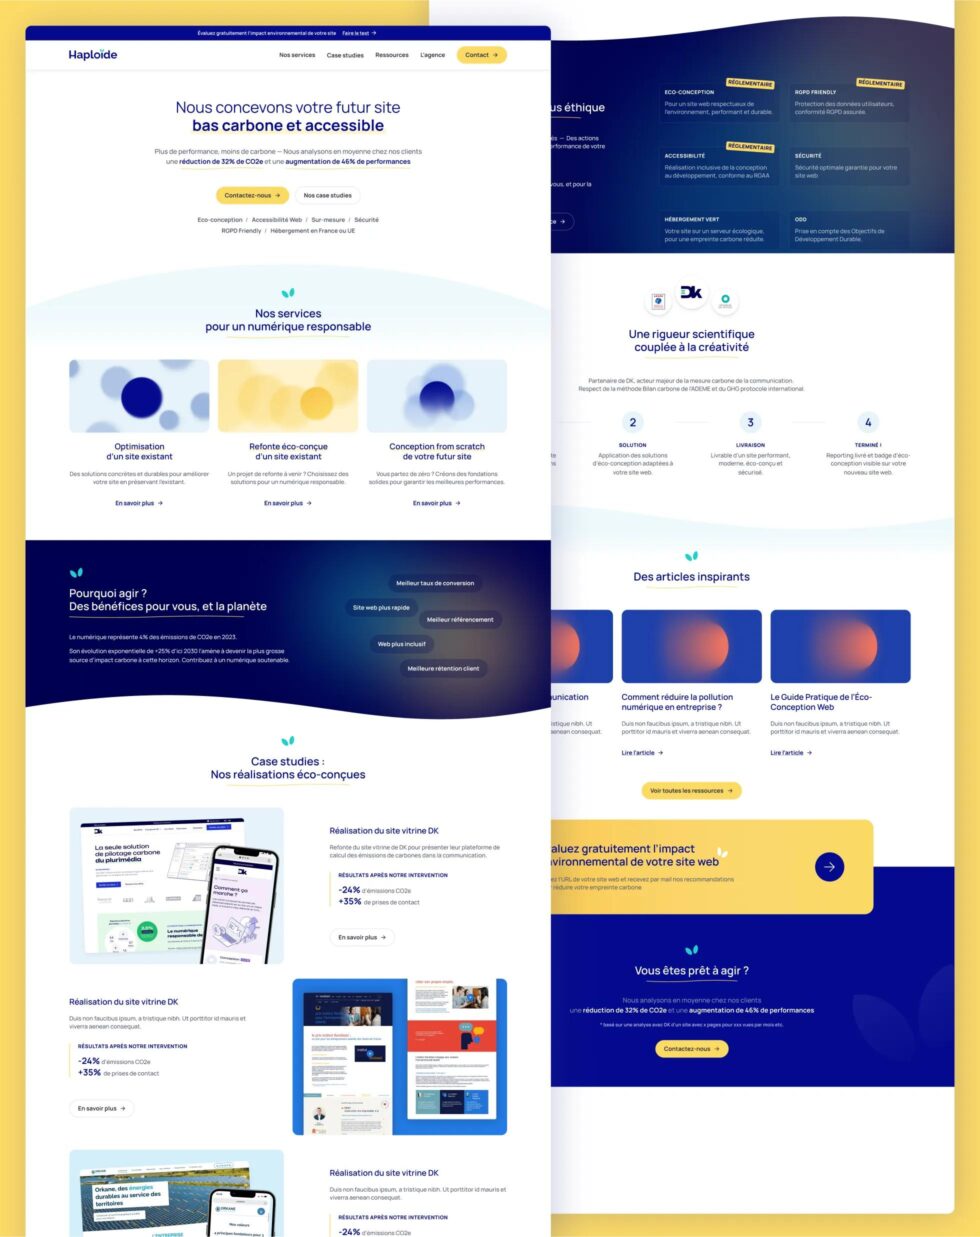 haploide-webdesign-homepage